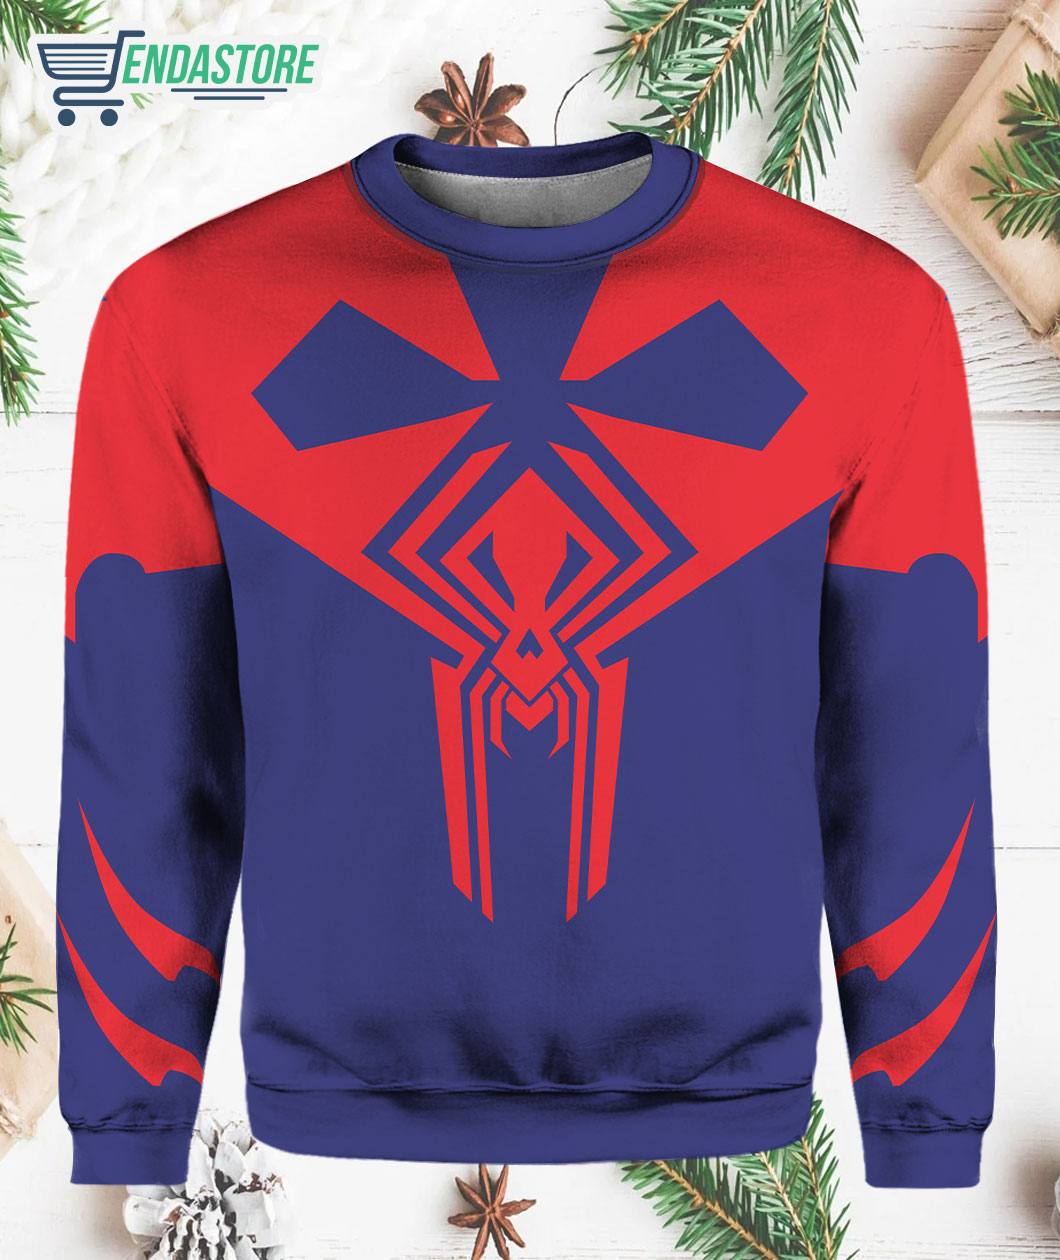 Endastore Spiderman 2099 Compression Shirt